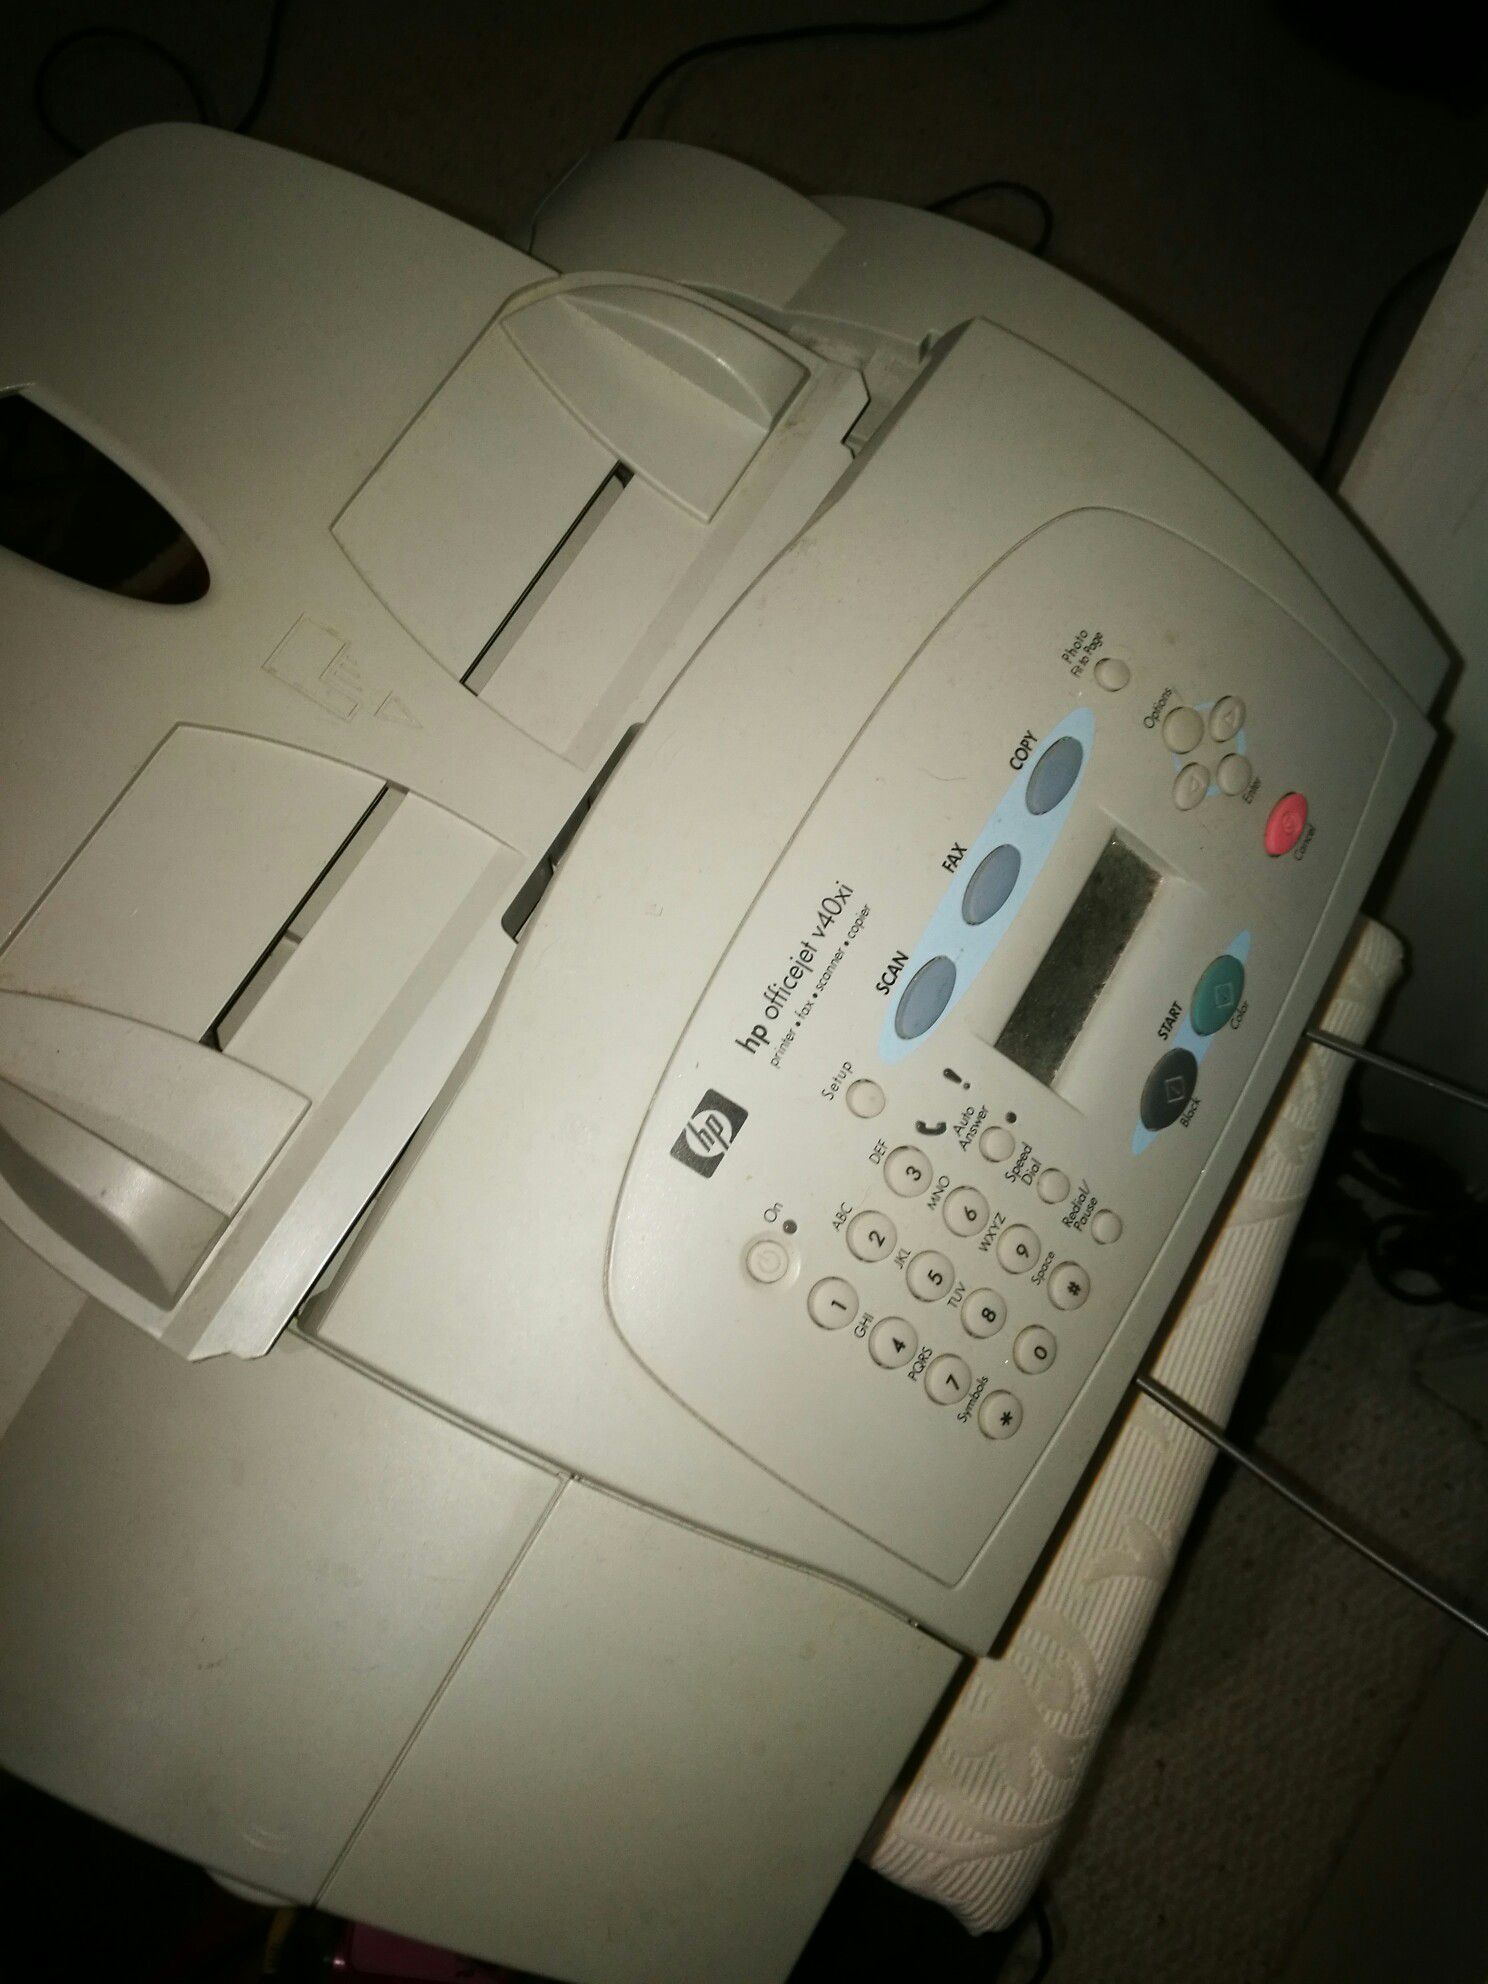 Free Printer, fax, copier...